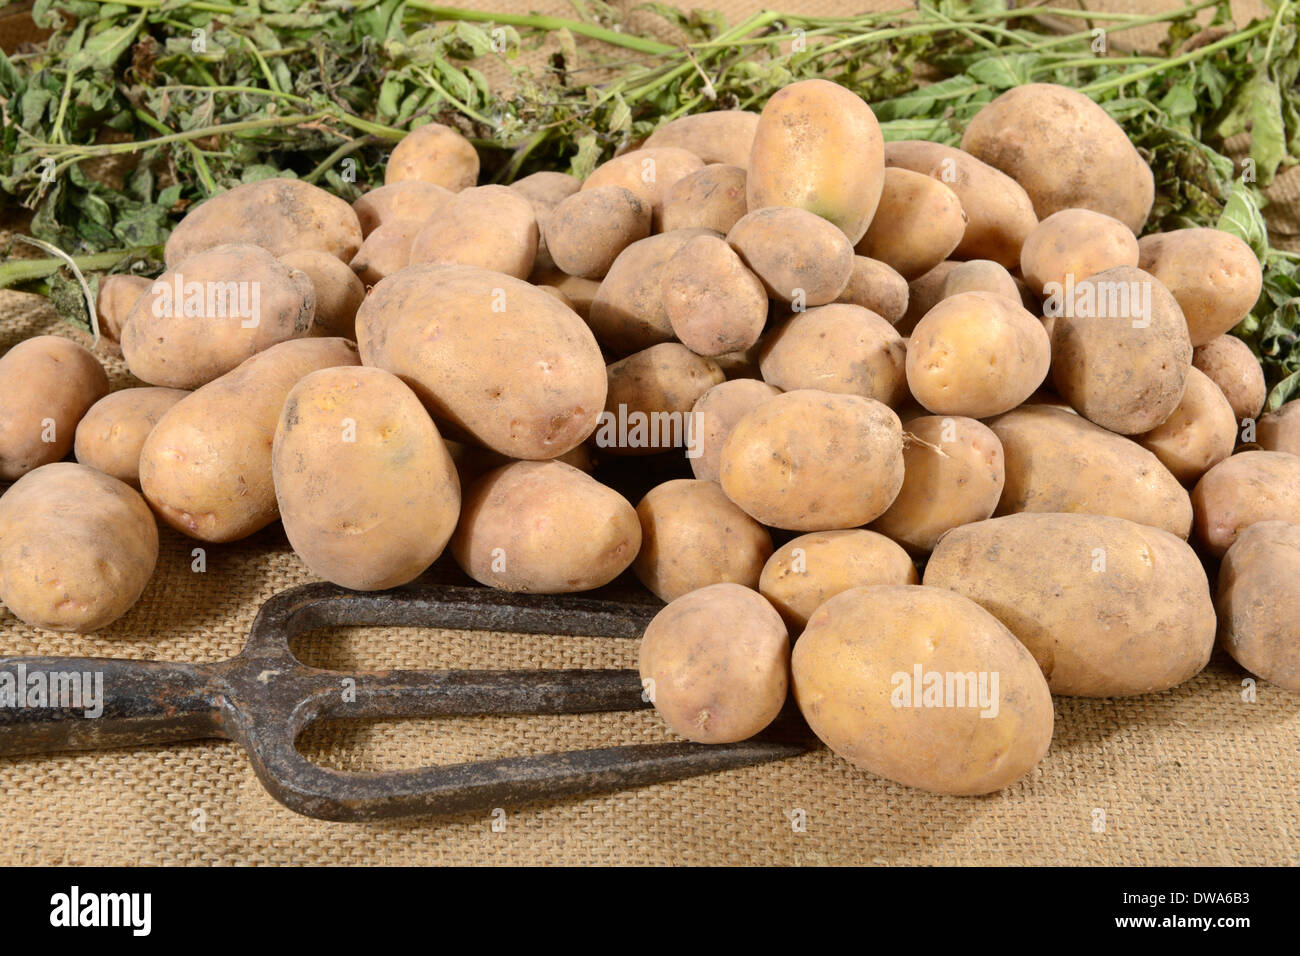 Kartoffel Linda Stockfotografie - Alamy